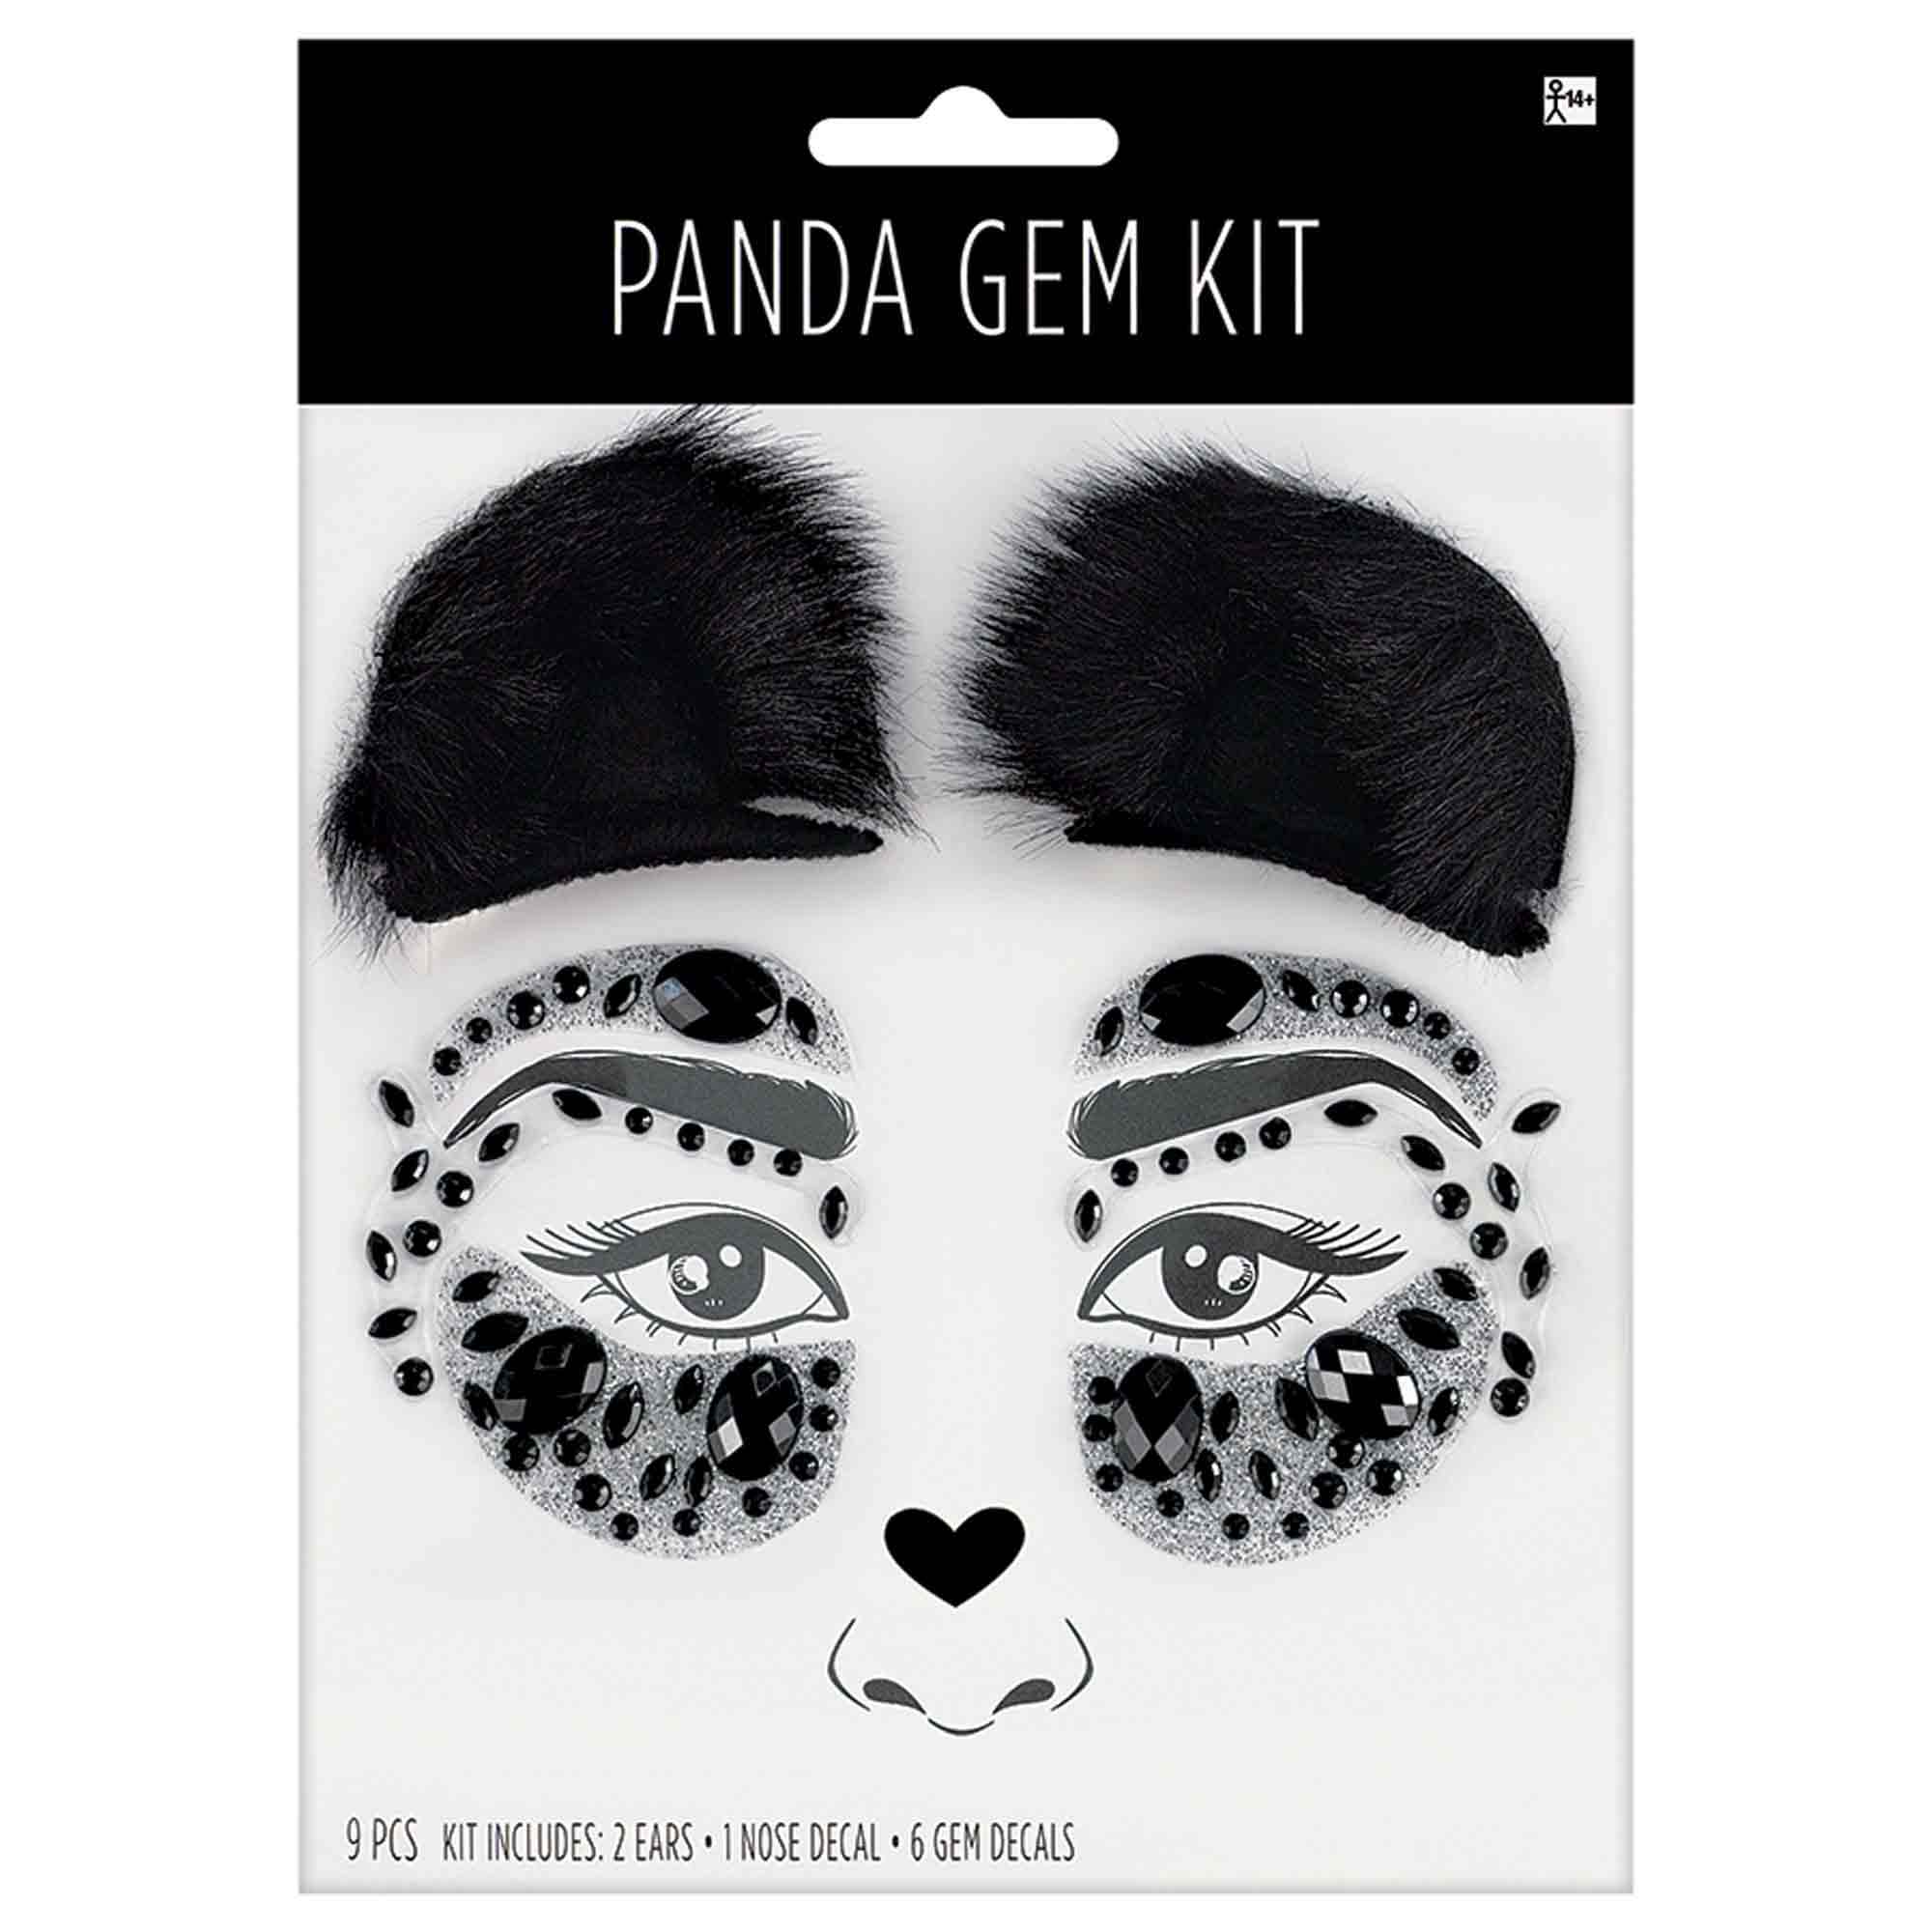 Panda Gem Kit with Ears